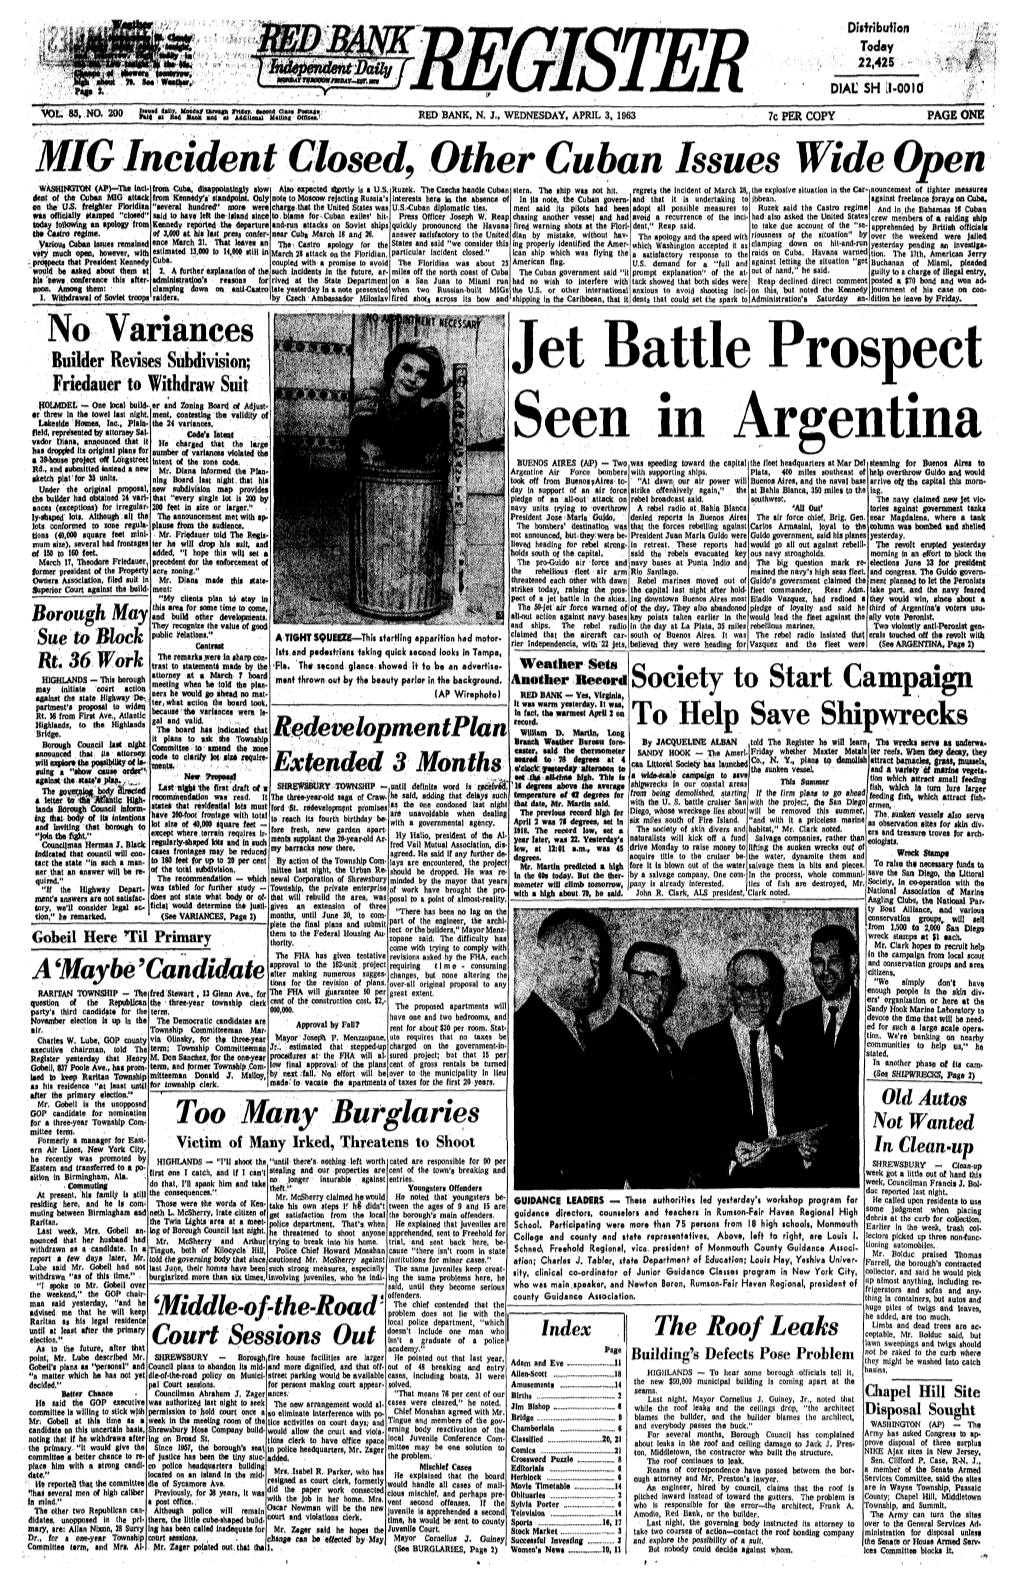 Jet Battle Prospect Seen in Argentina